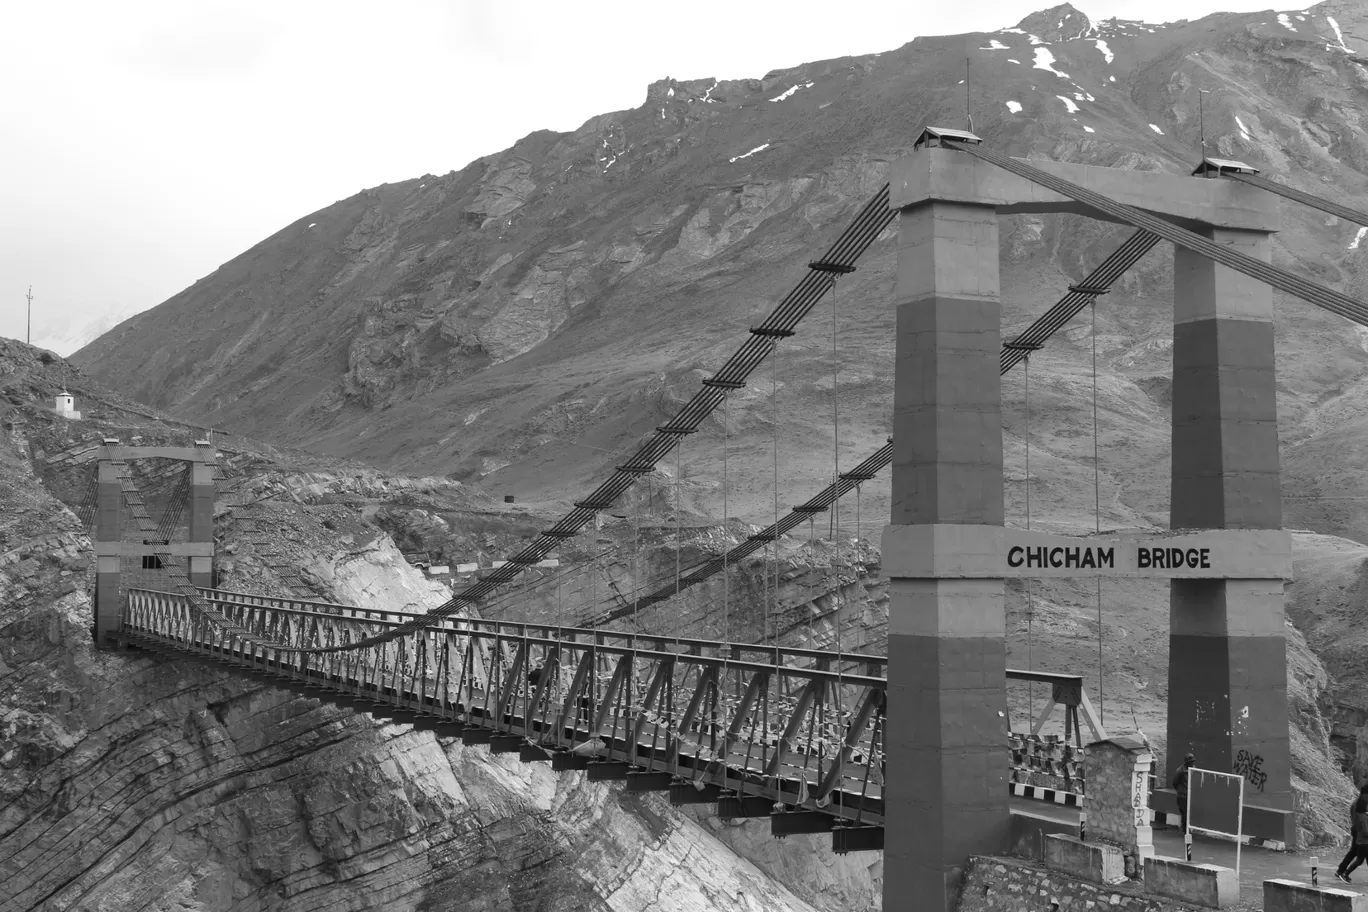 Photo of Chicham Bridge By shubh shukla